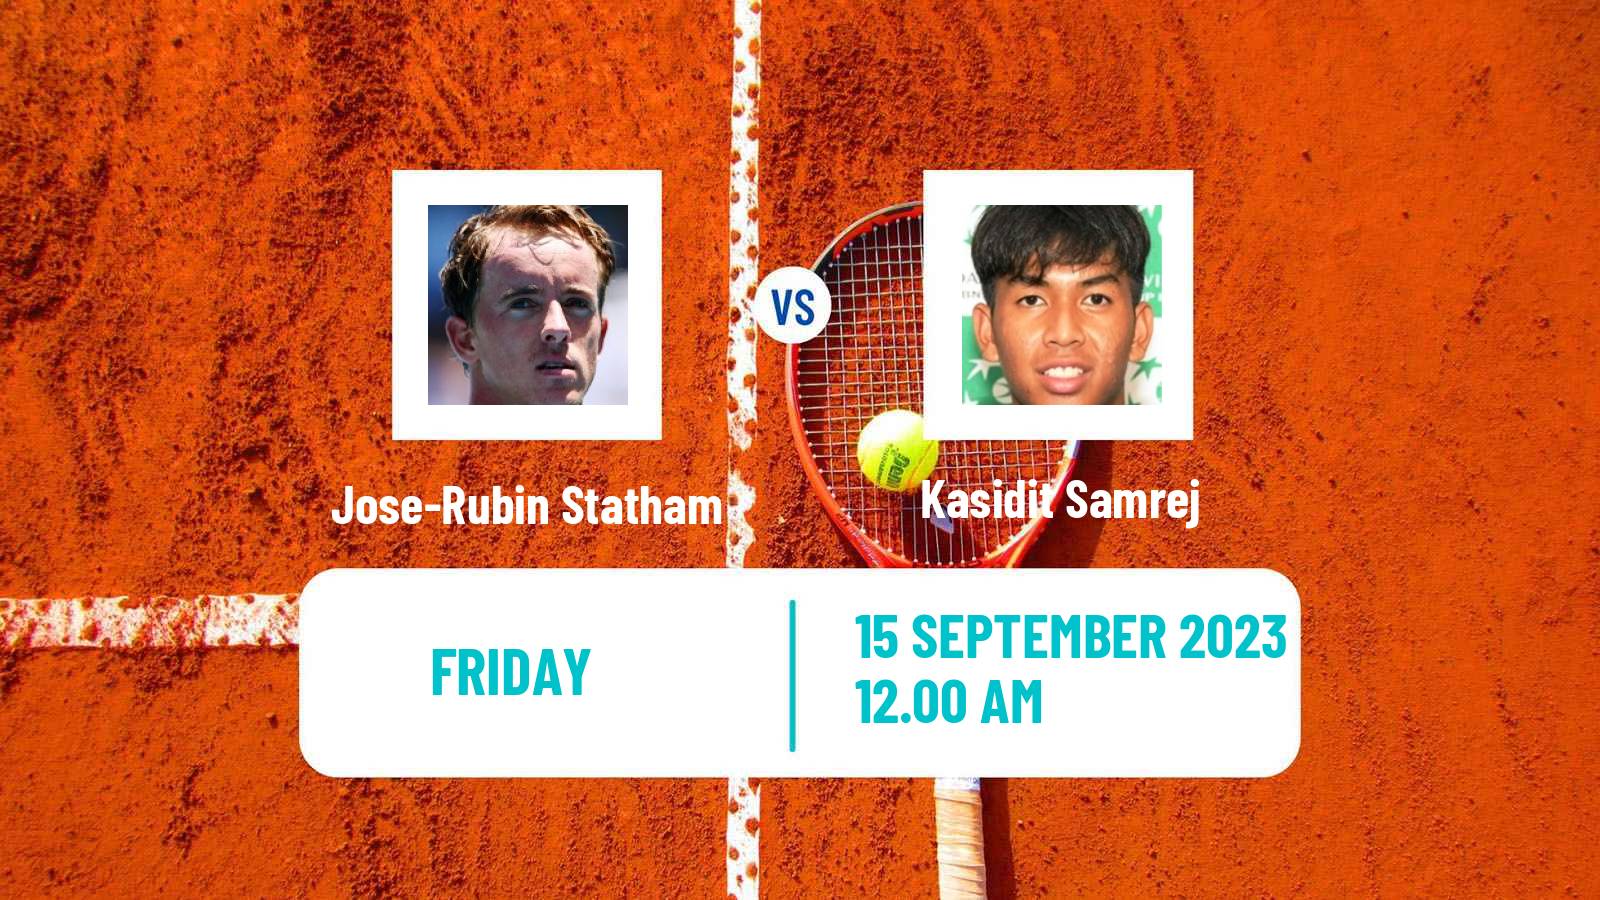 Tennis Davis Cup World Group II Jose-Rubin Statham - Kasidit Samrej